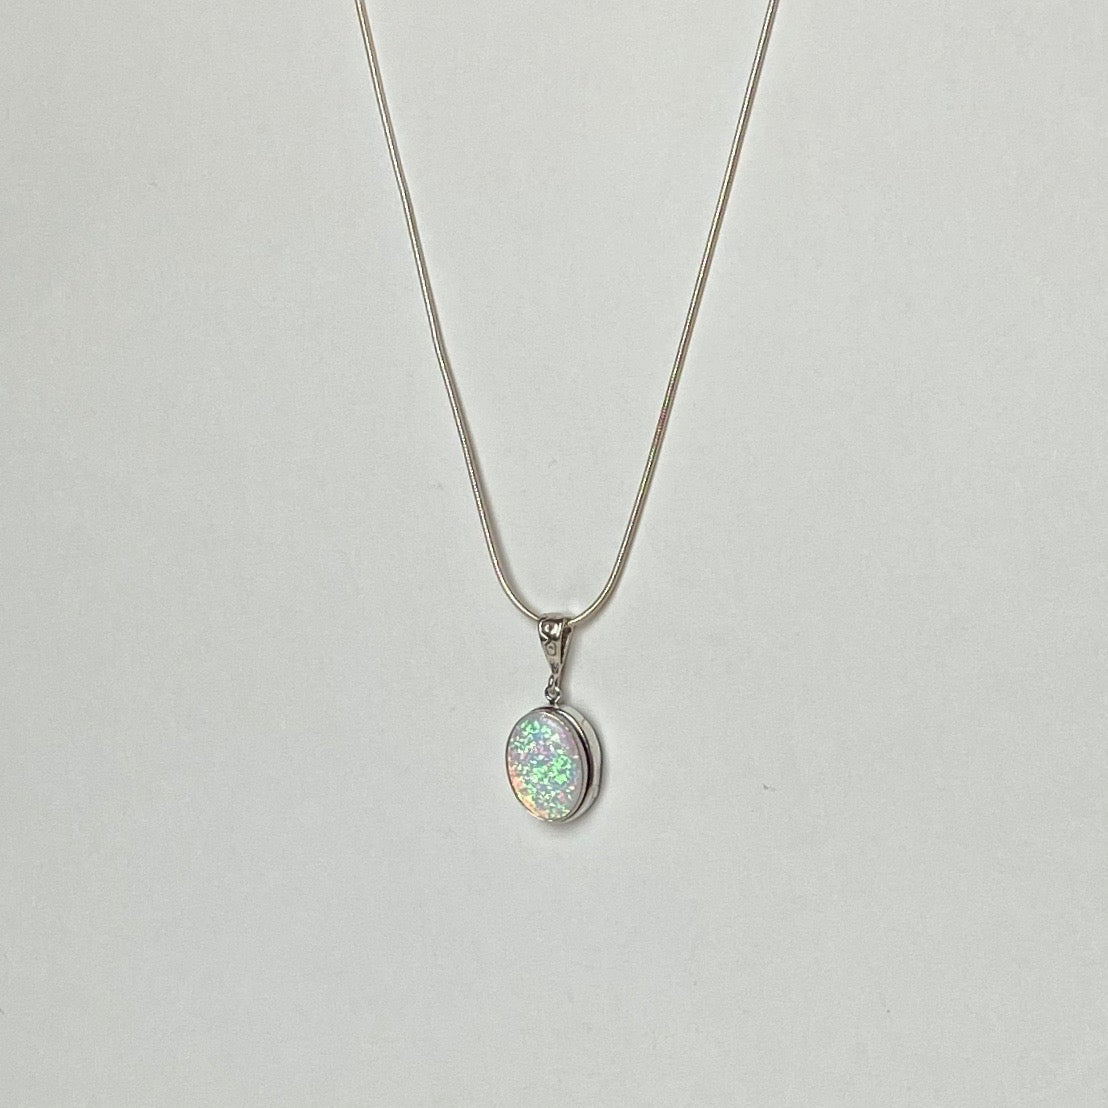 White Opal Pendant - The Nancy Smillie Shop - Art, Jewellery & Designer Gifts Glasgow